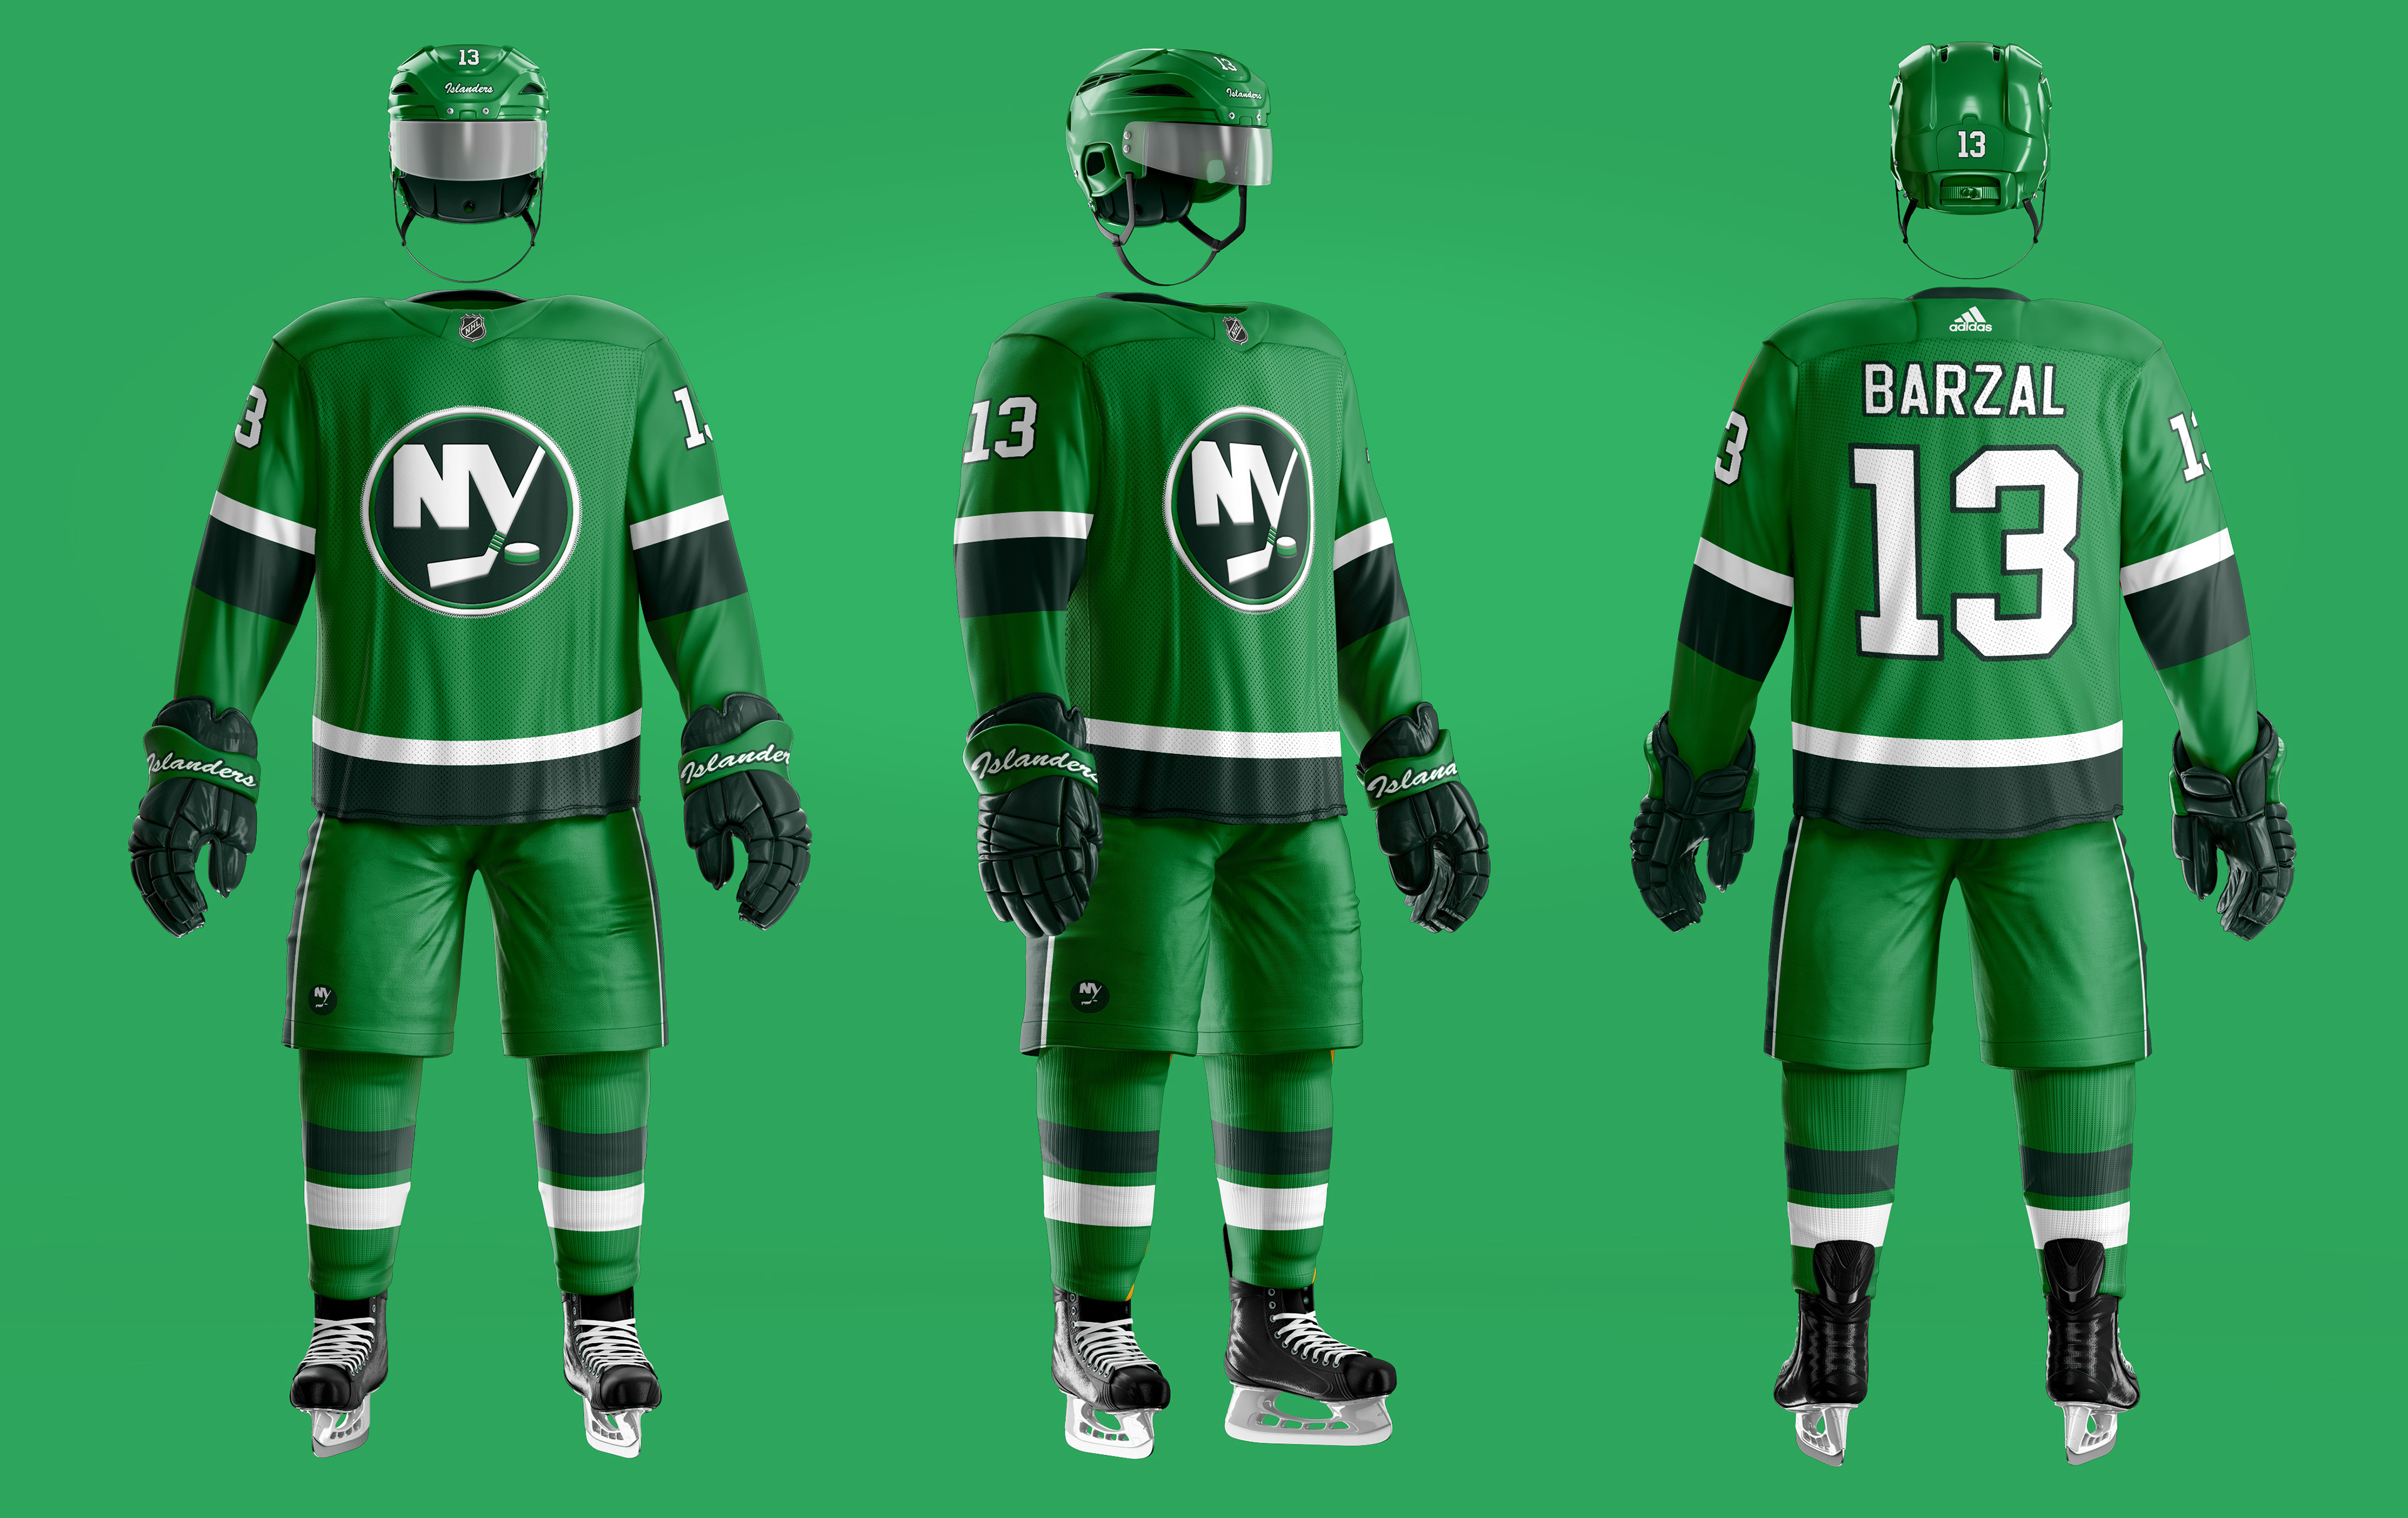 Designer Creats NHL/NFL Uniform Mashups For Every Hockey Team - Daily Snark